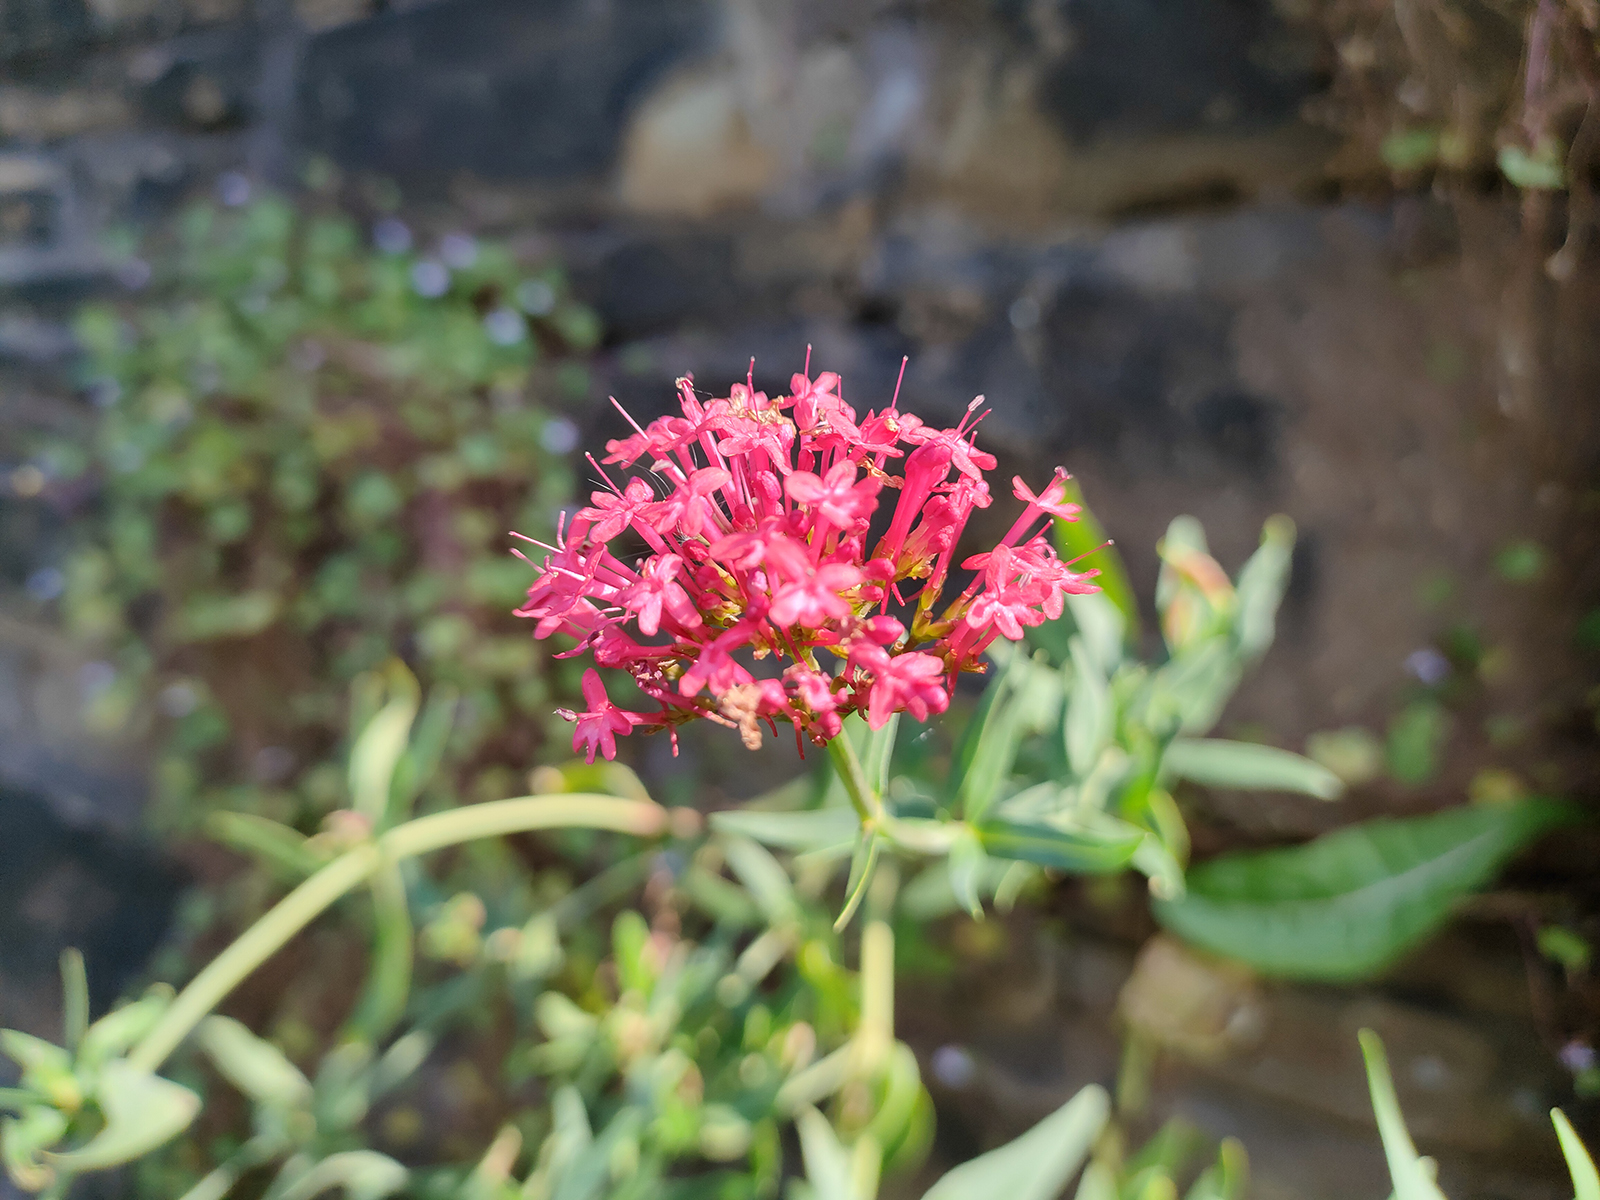 Realme GT Master Edition camera samples – a close-up of a flower.